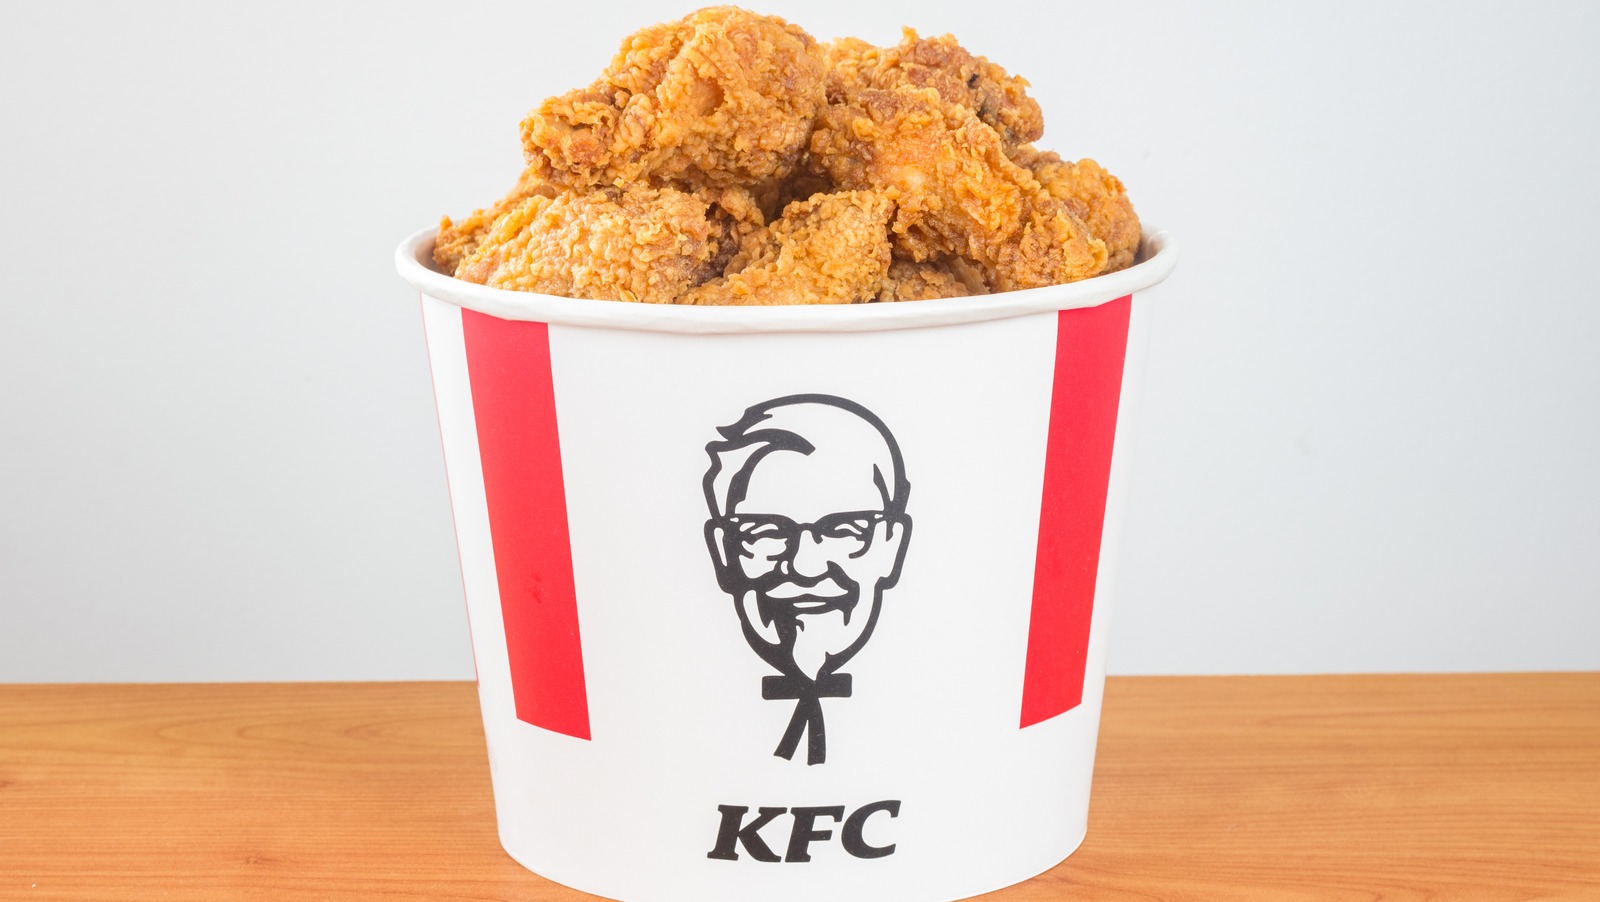 KFC's Offensive Kristallnacht Ad Is Facing Backlash